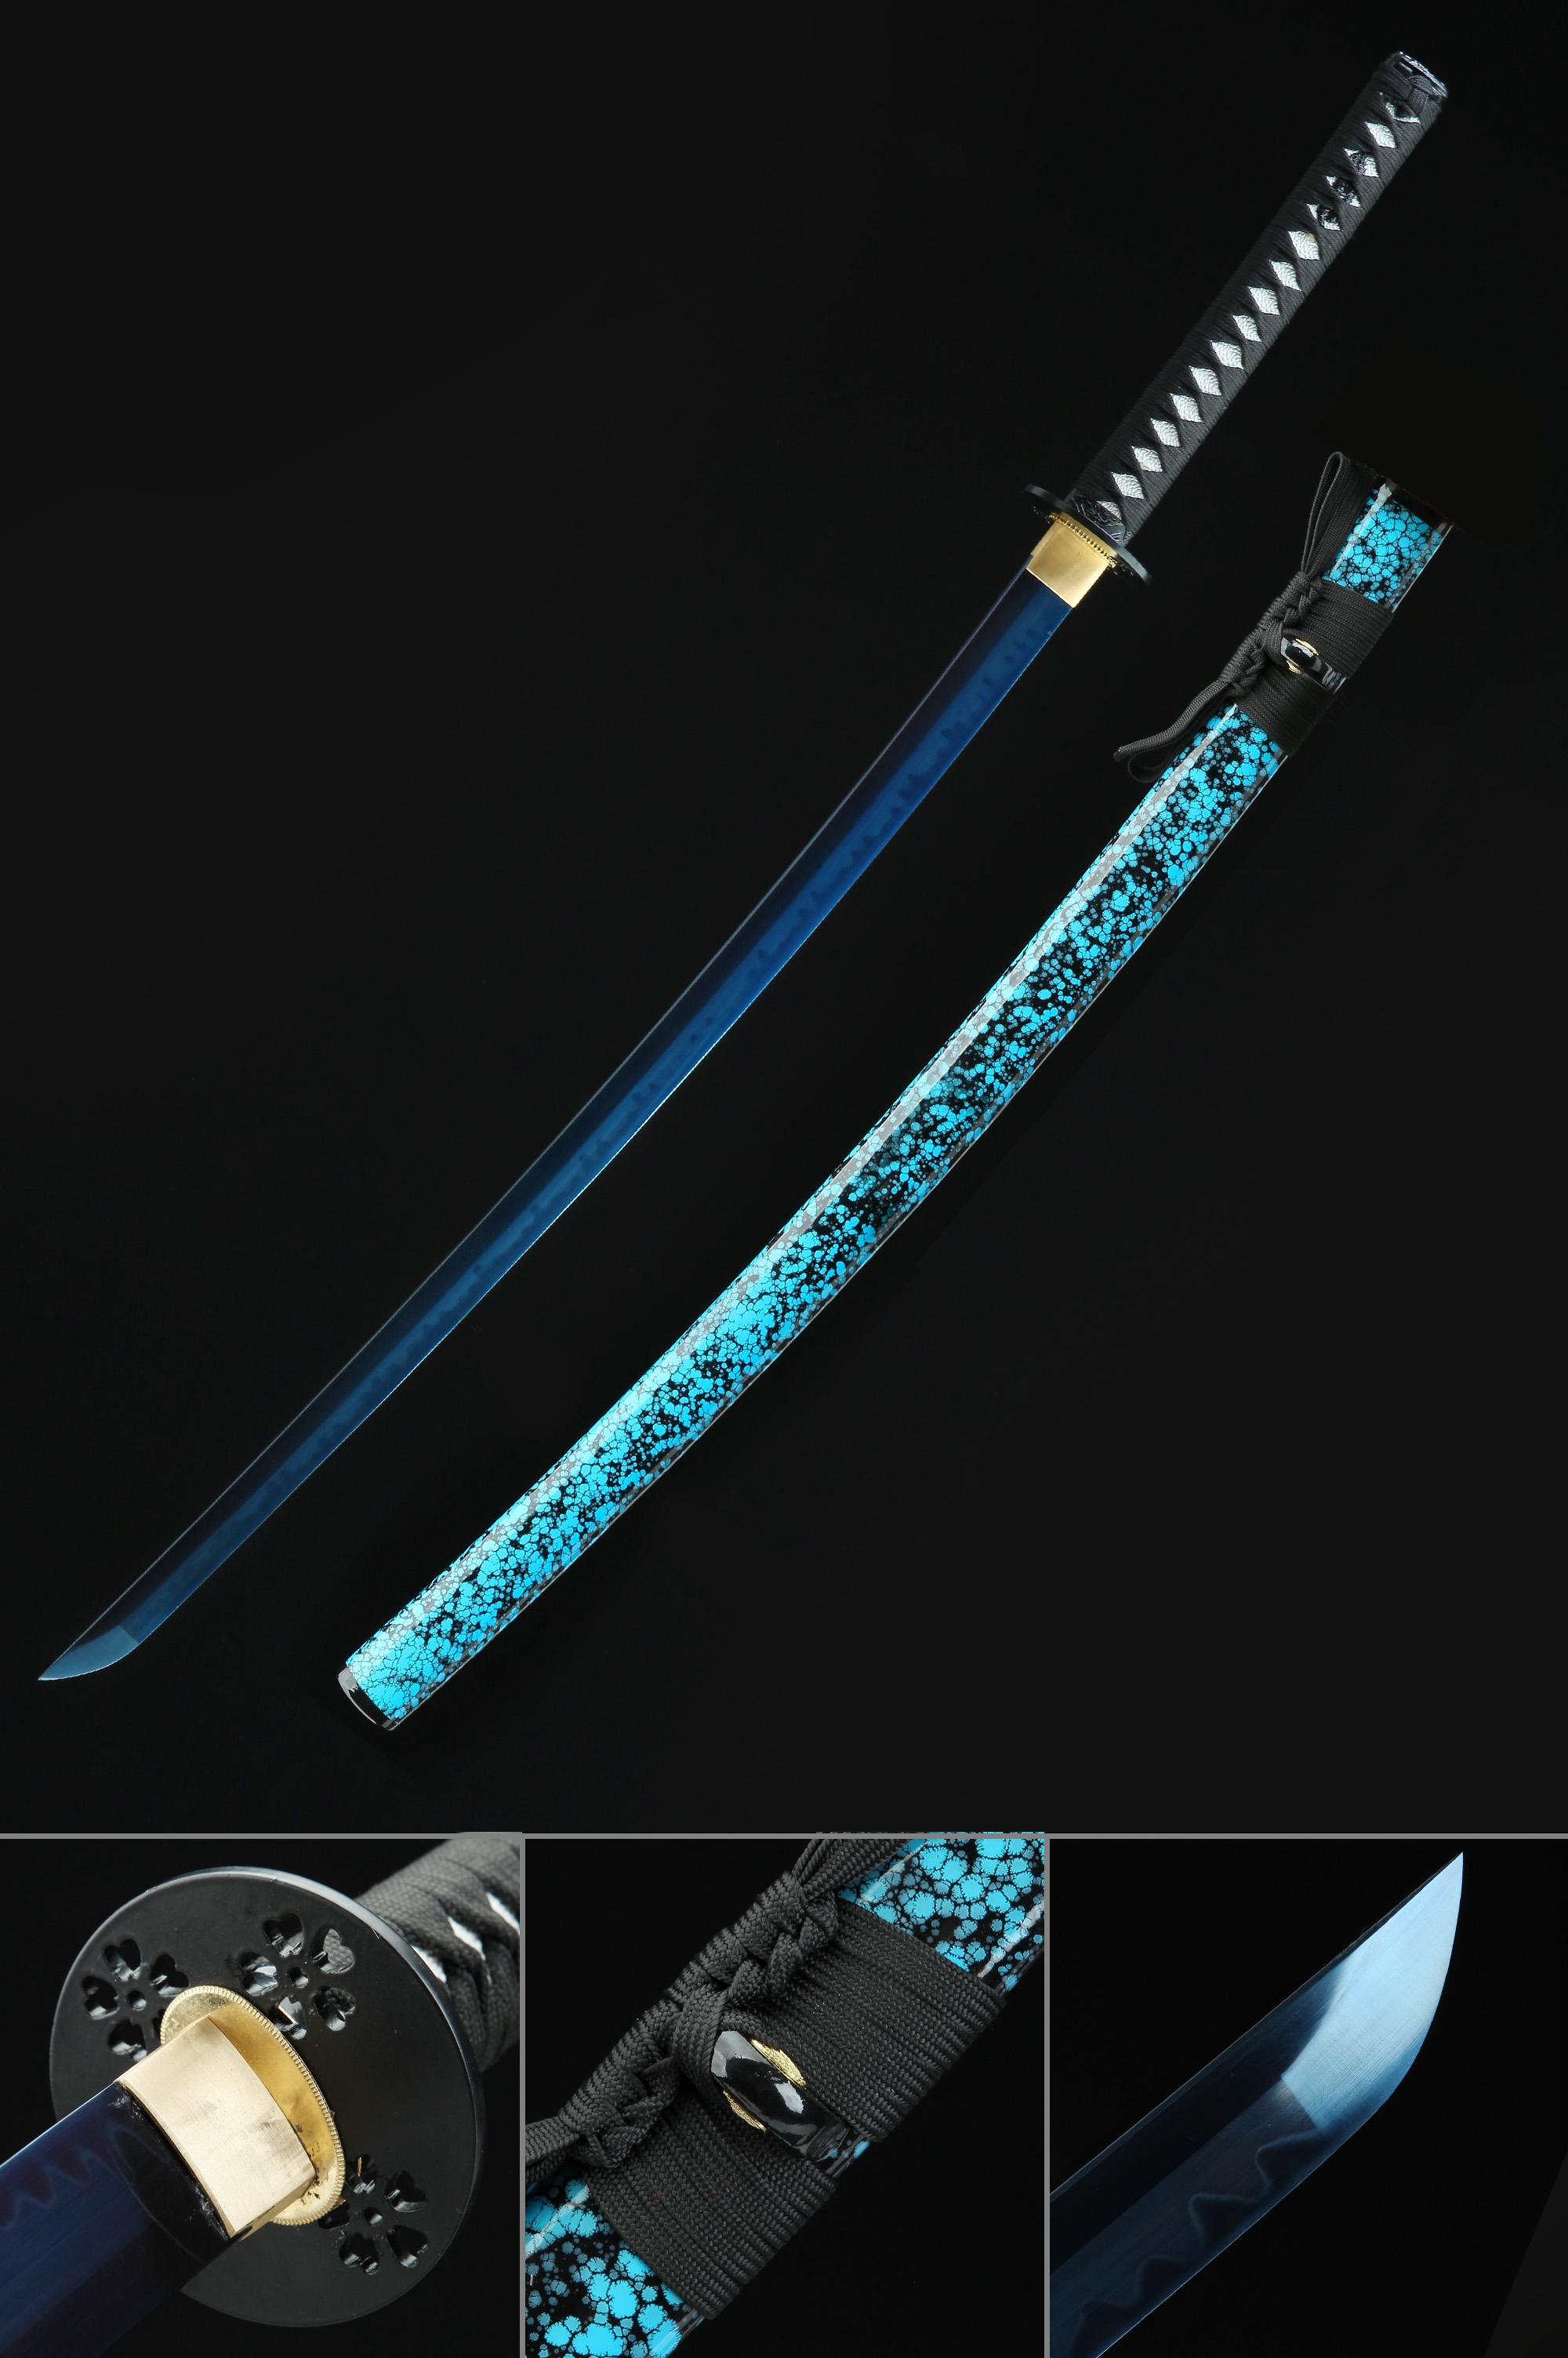 Samurai Sword for Sale - TrueKatana